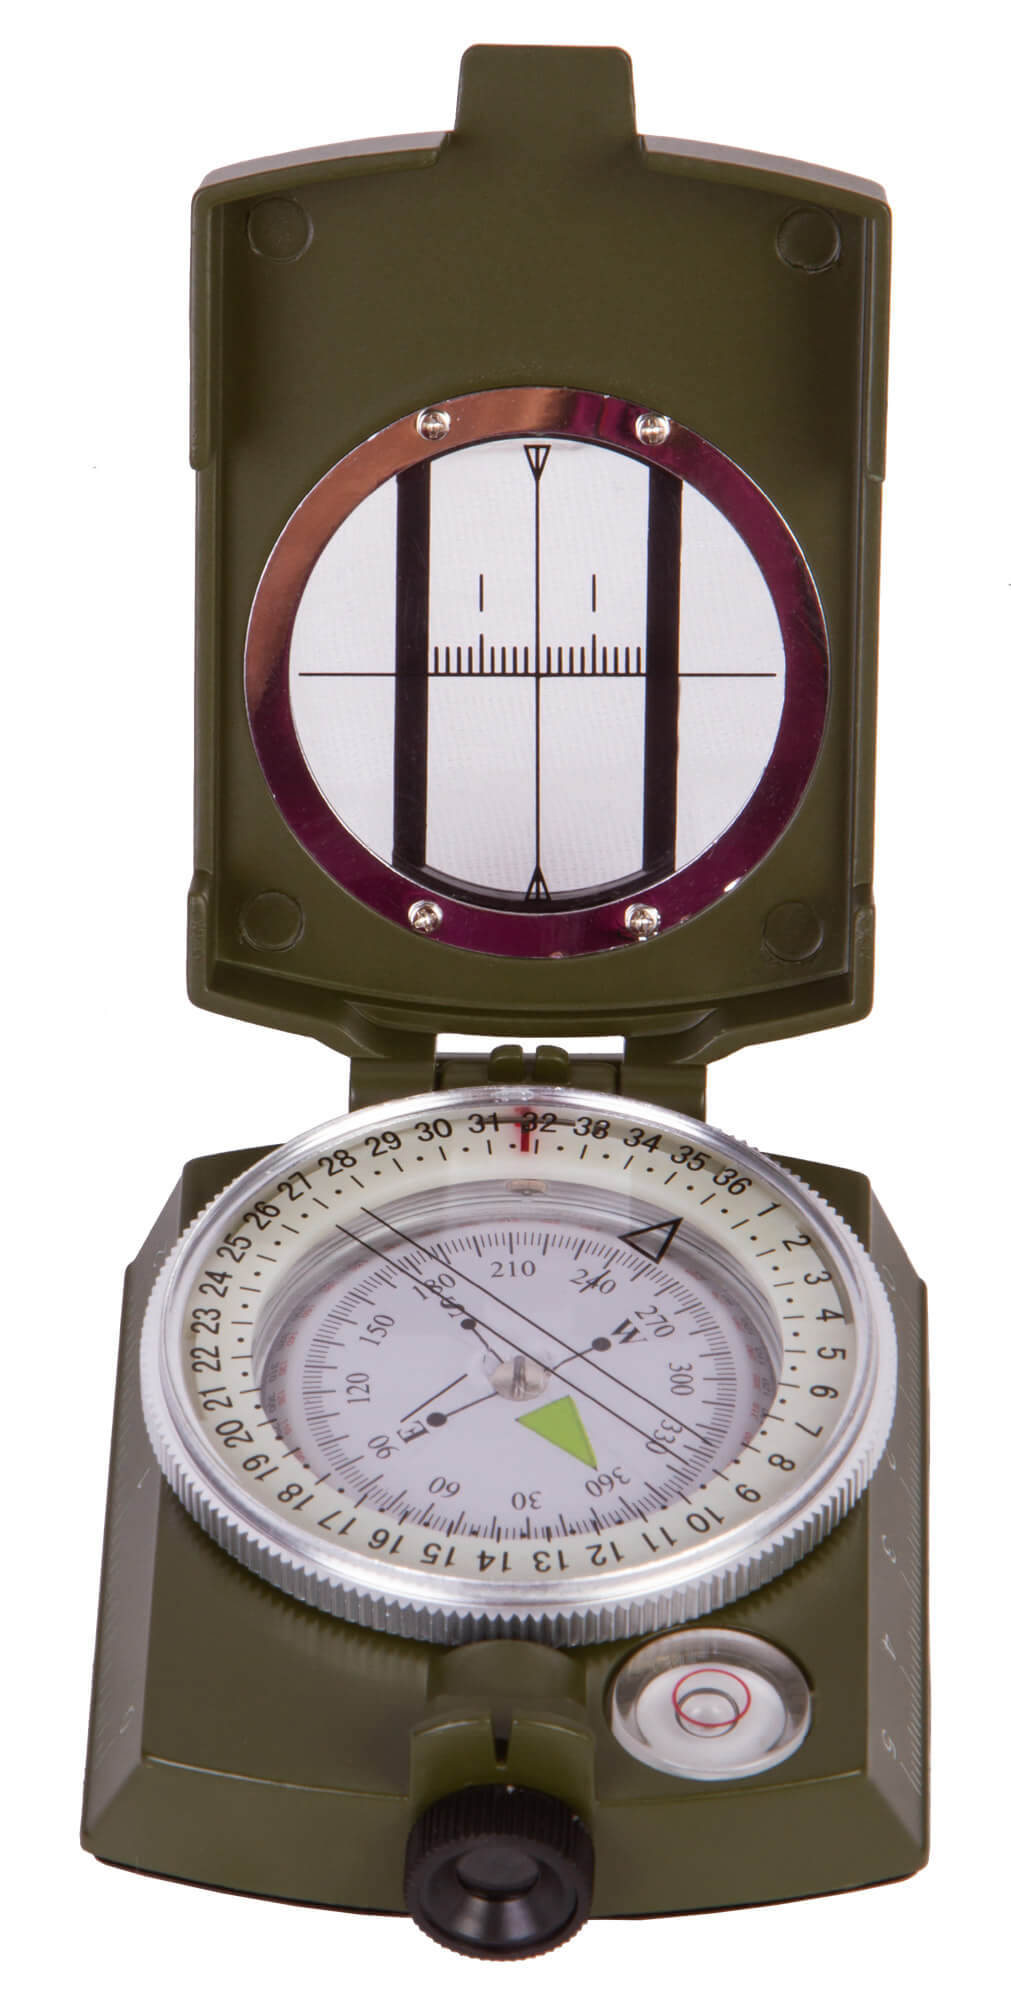 Kompas Levenhuk Army AC10